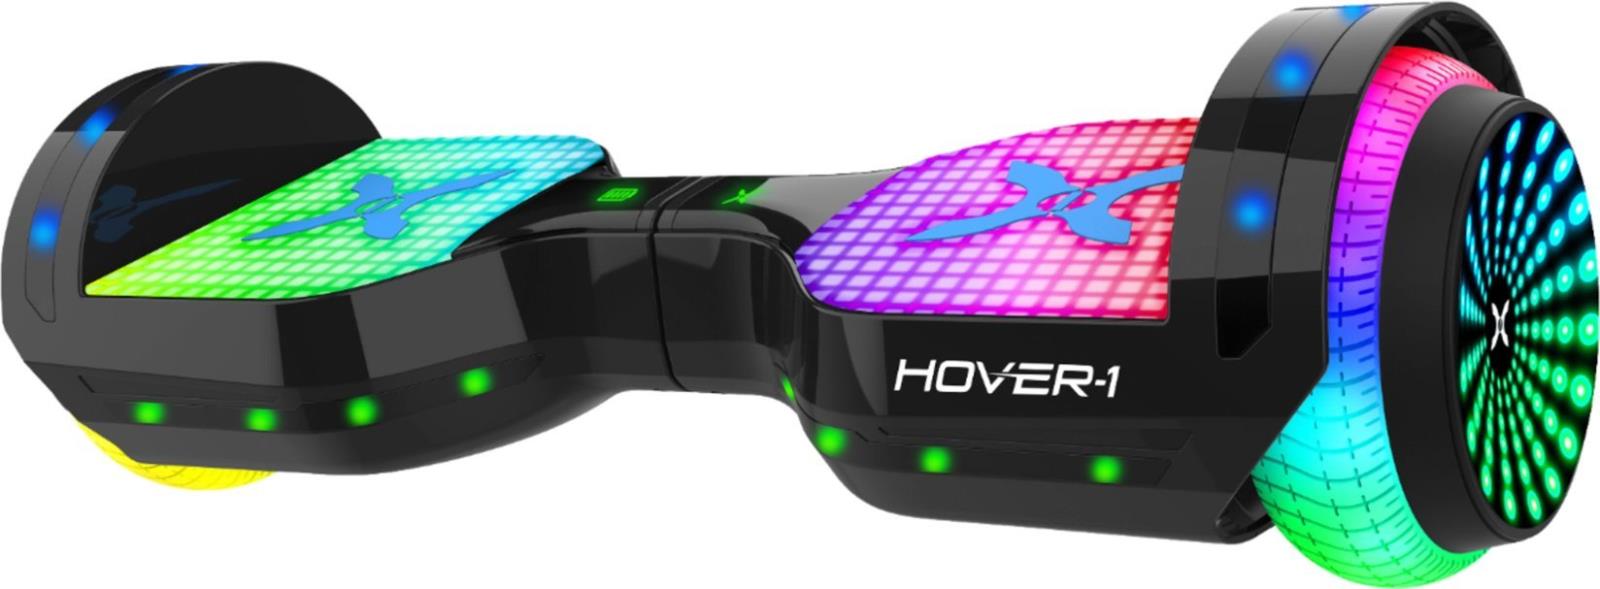 Hover 1 Astro Hoverboard - Black